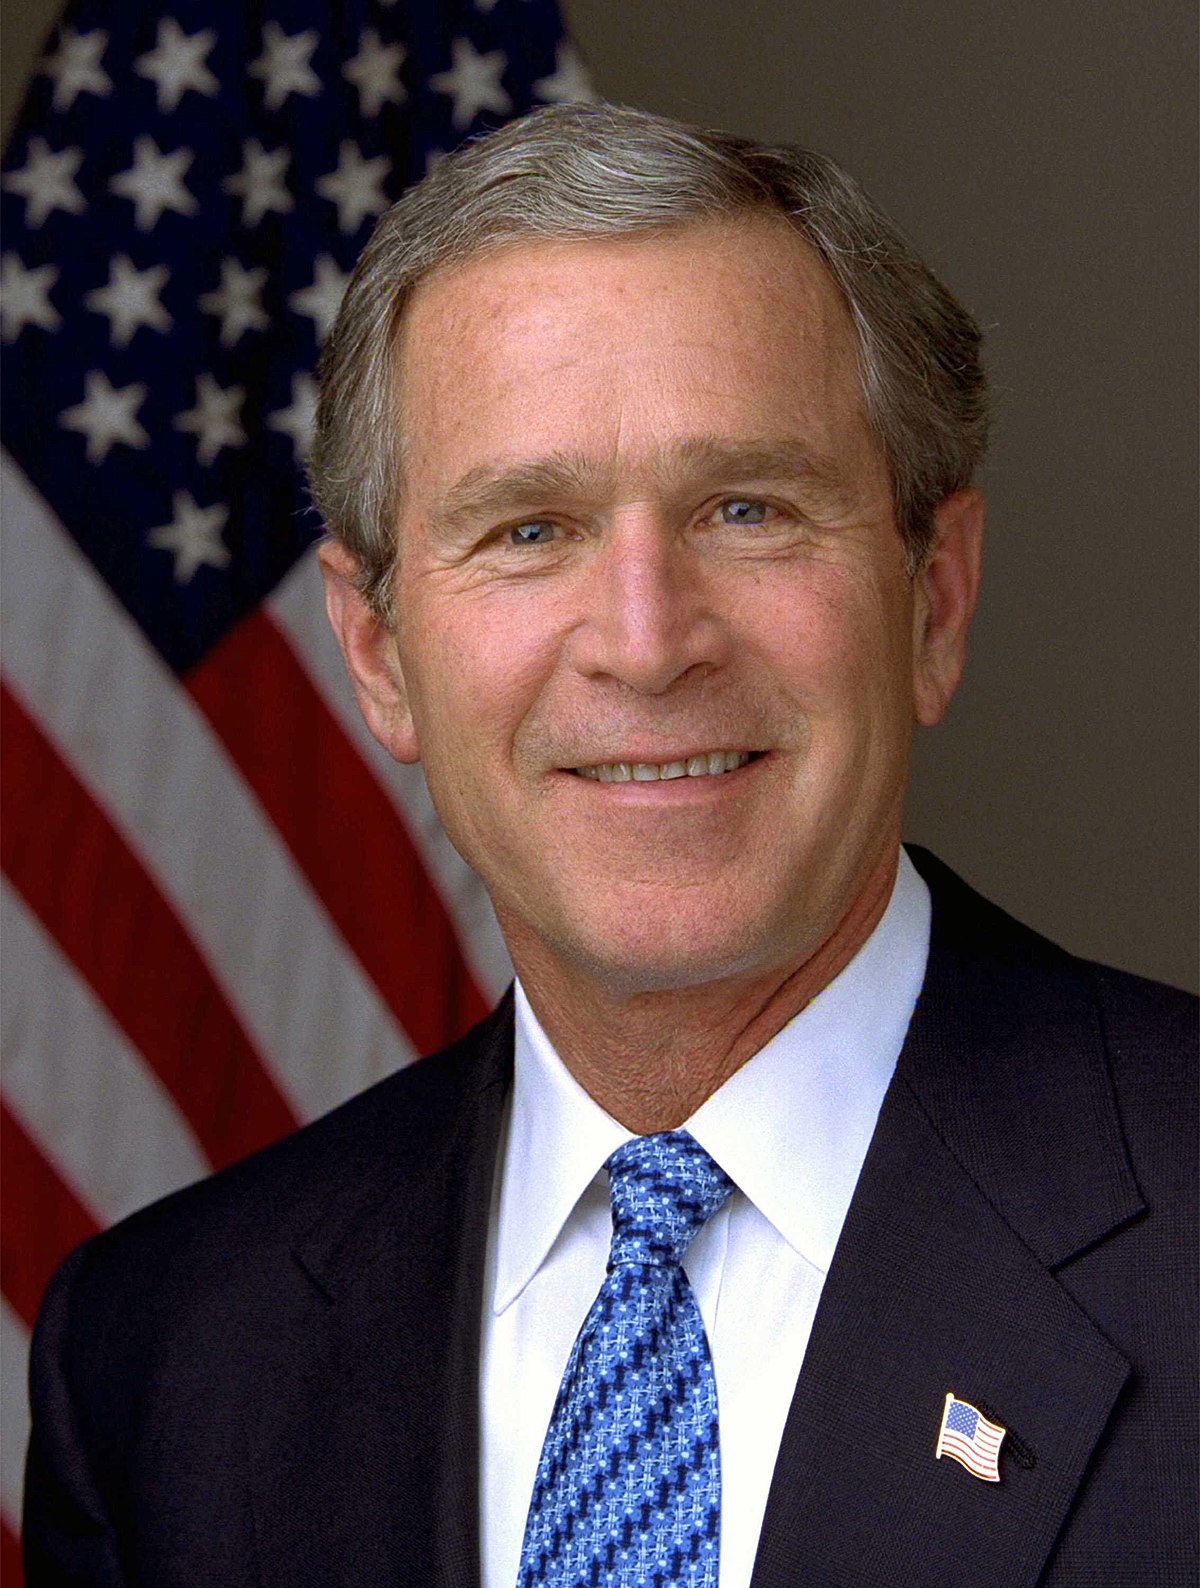 President Bush on Terri Schiavo